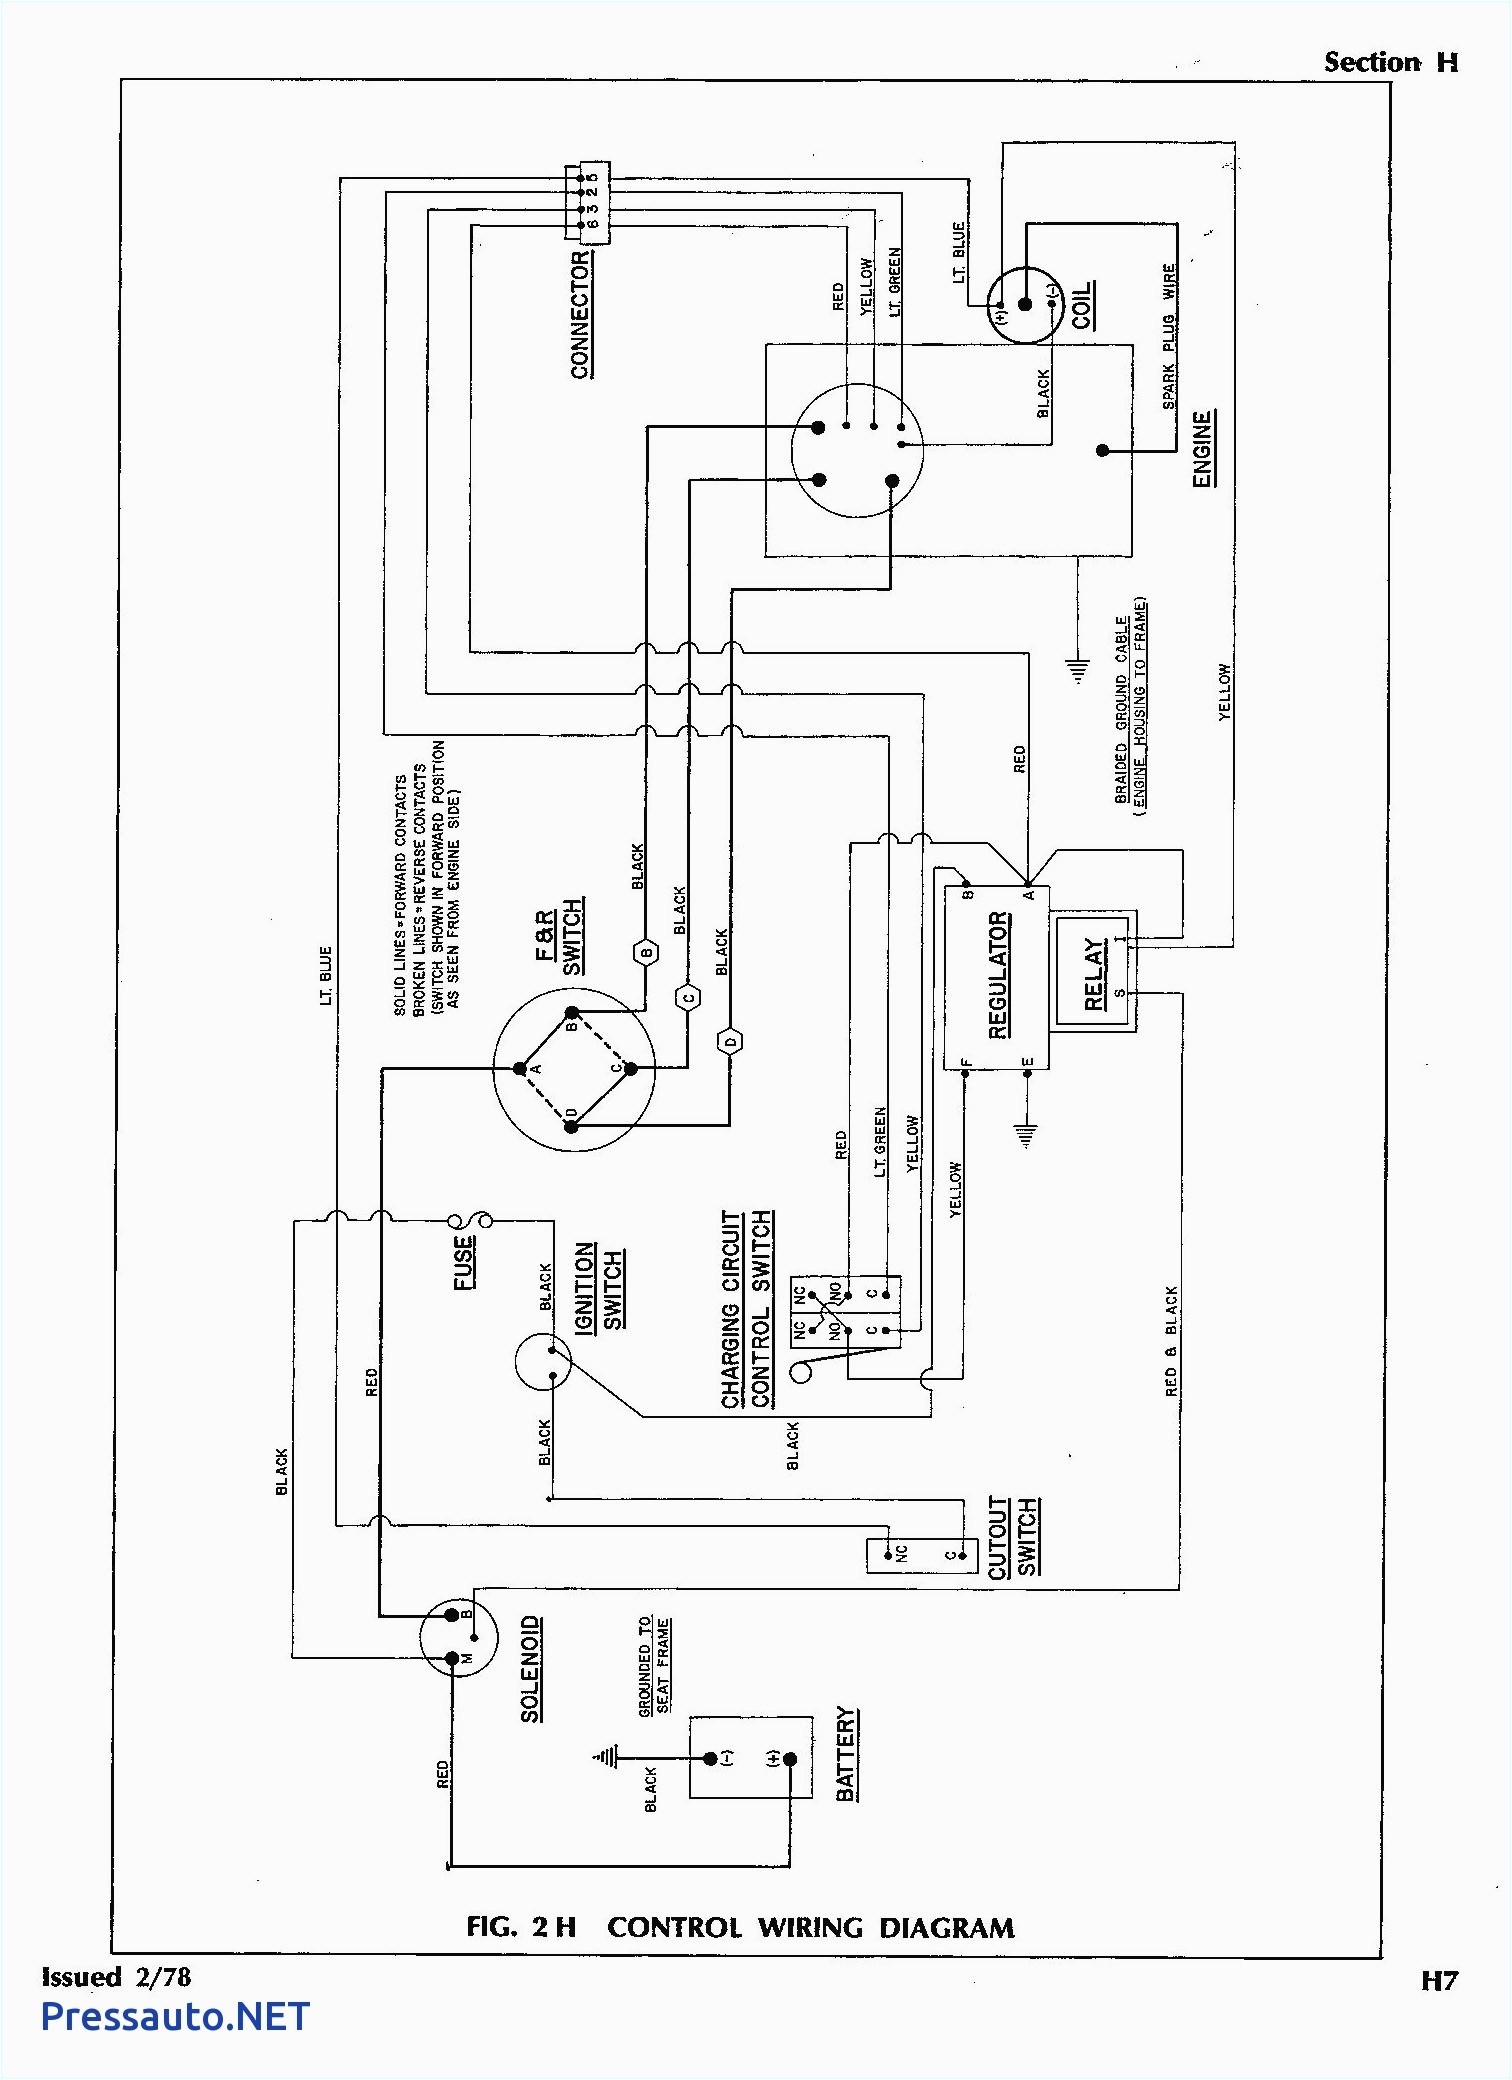 1979 ez go wiring harness diagram wiring diagram used 1979 ezgo golf cart wiring diagram 1979 ezgo golf cart wiring diagram